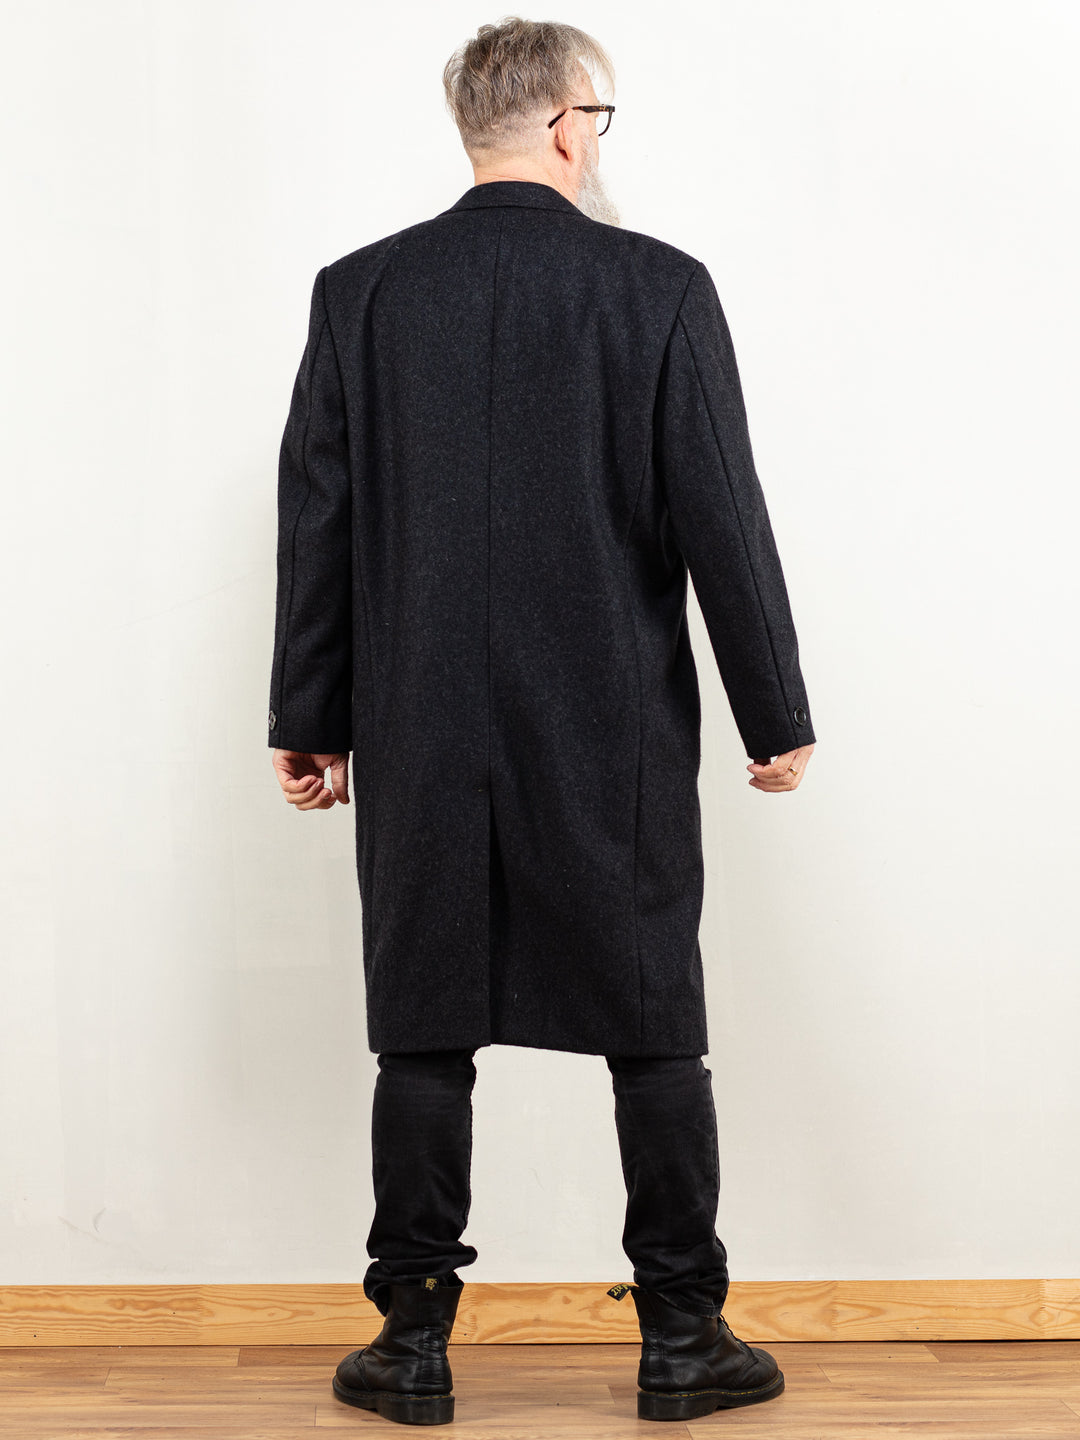 Men Wool Coat dark grey wool blend coat men classic winter overcoat minimalist single breasted wool coat casual winter overcoat size large